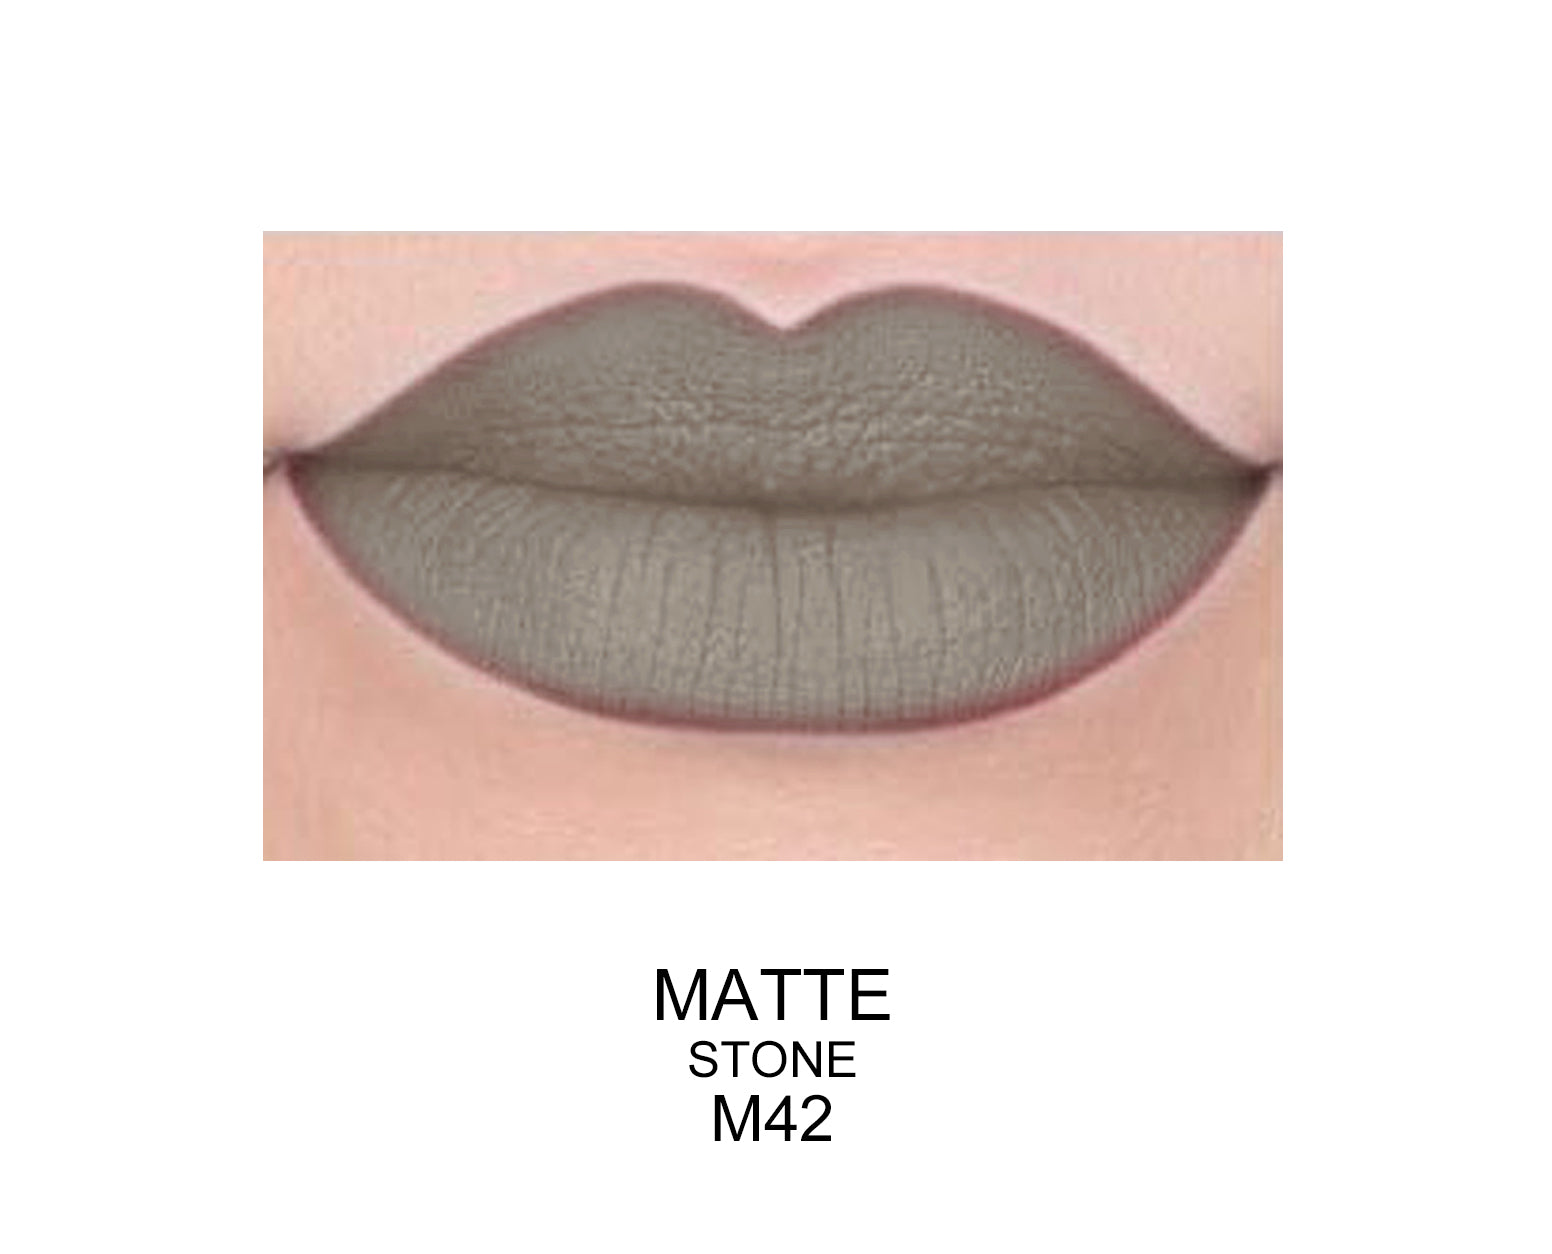 Long Lasting Matte Lip Gloss matte stone m42